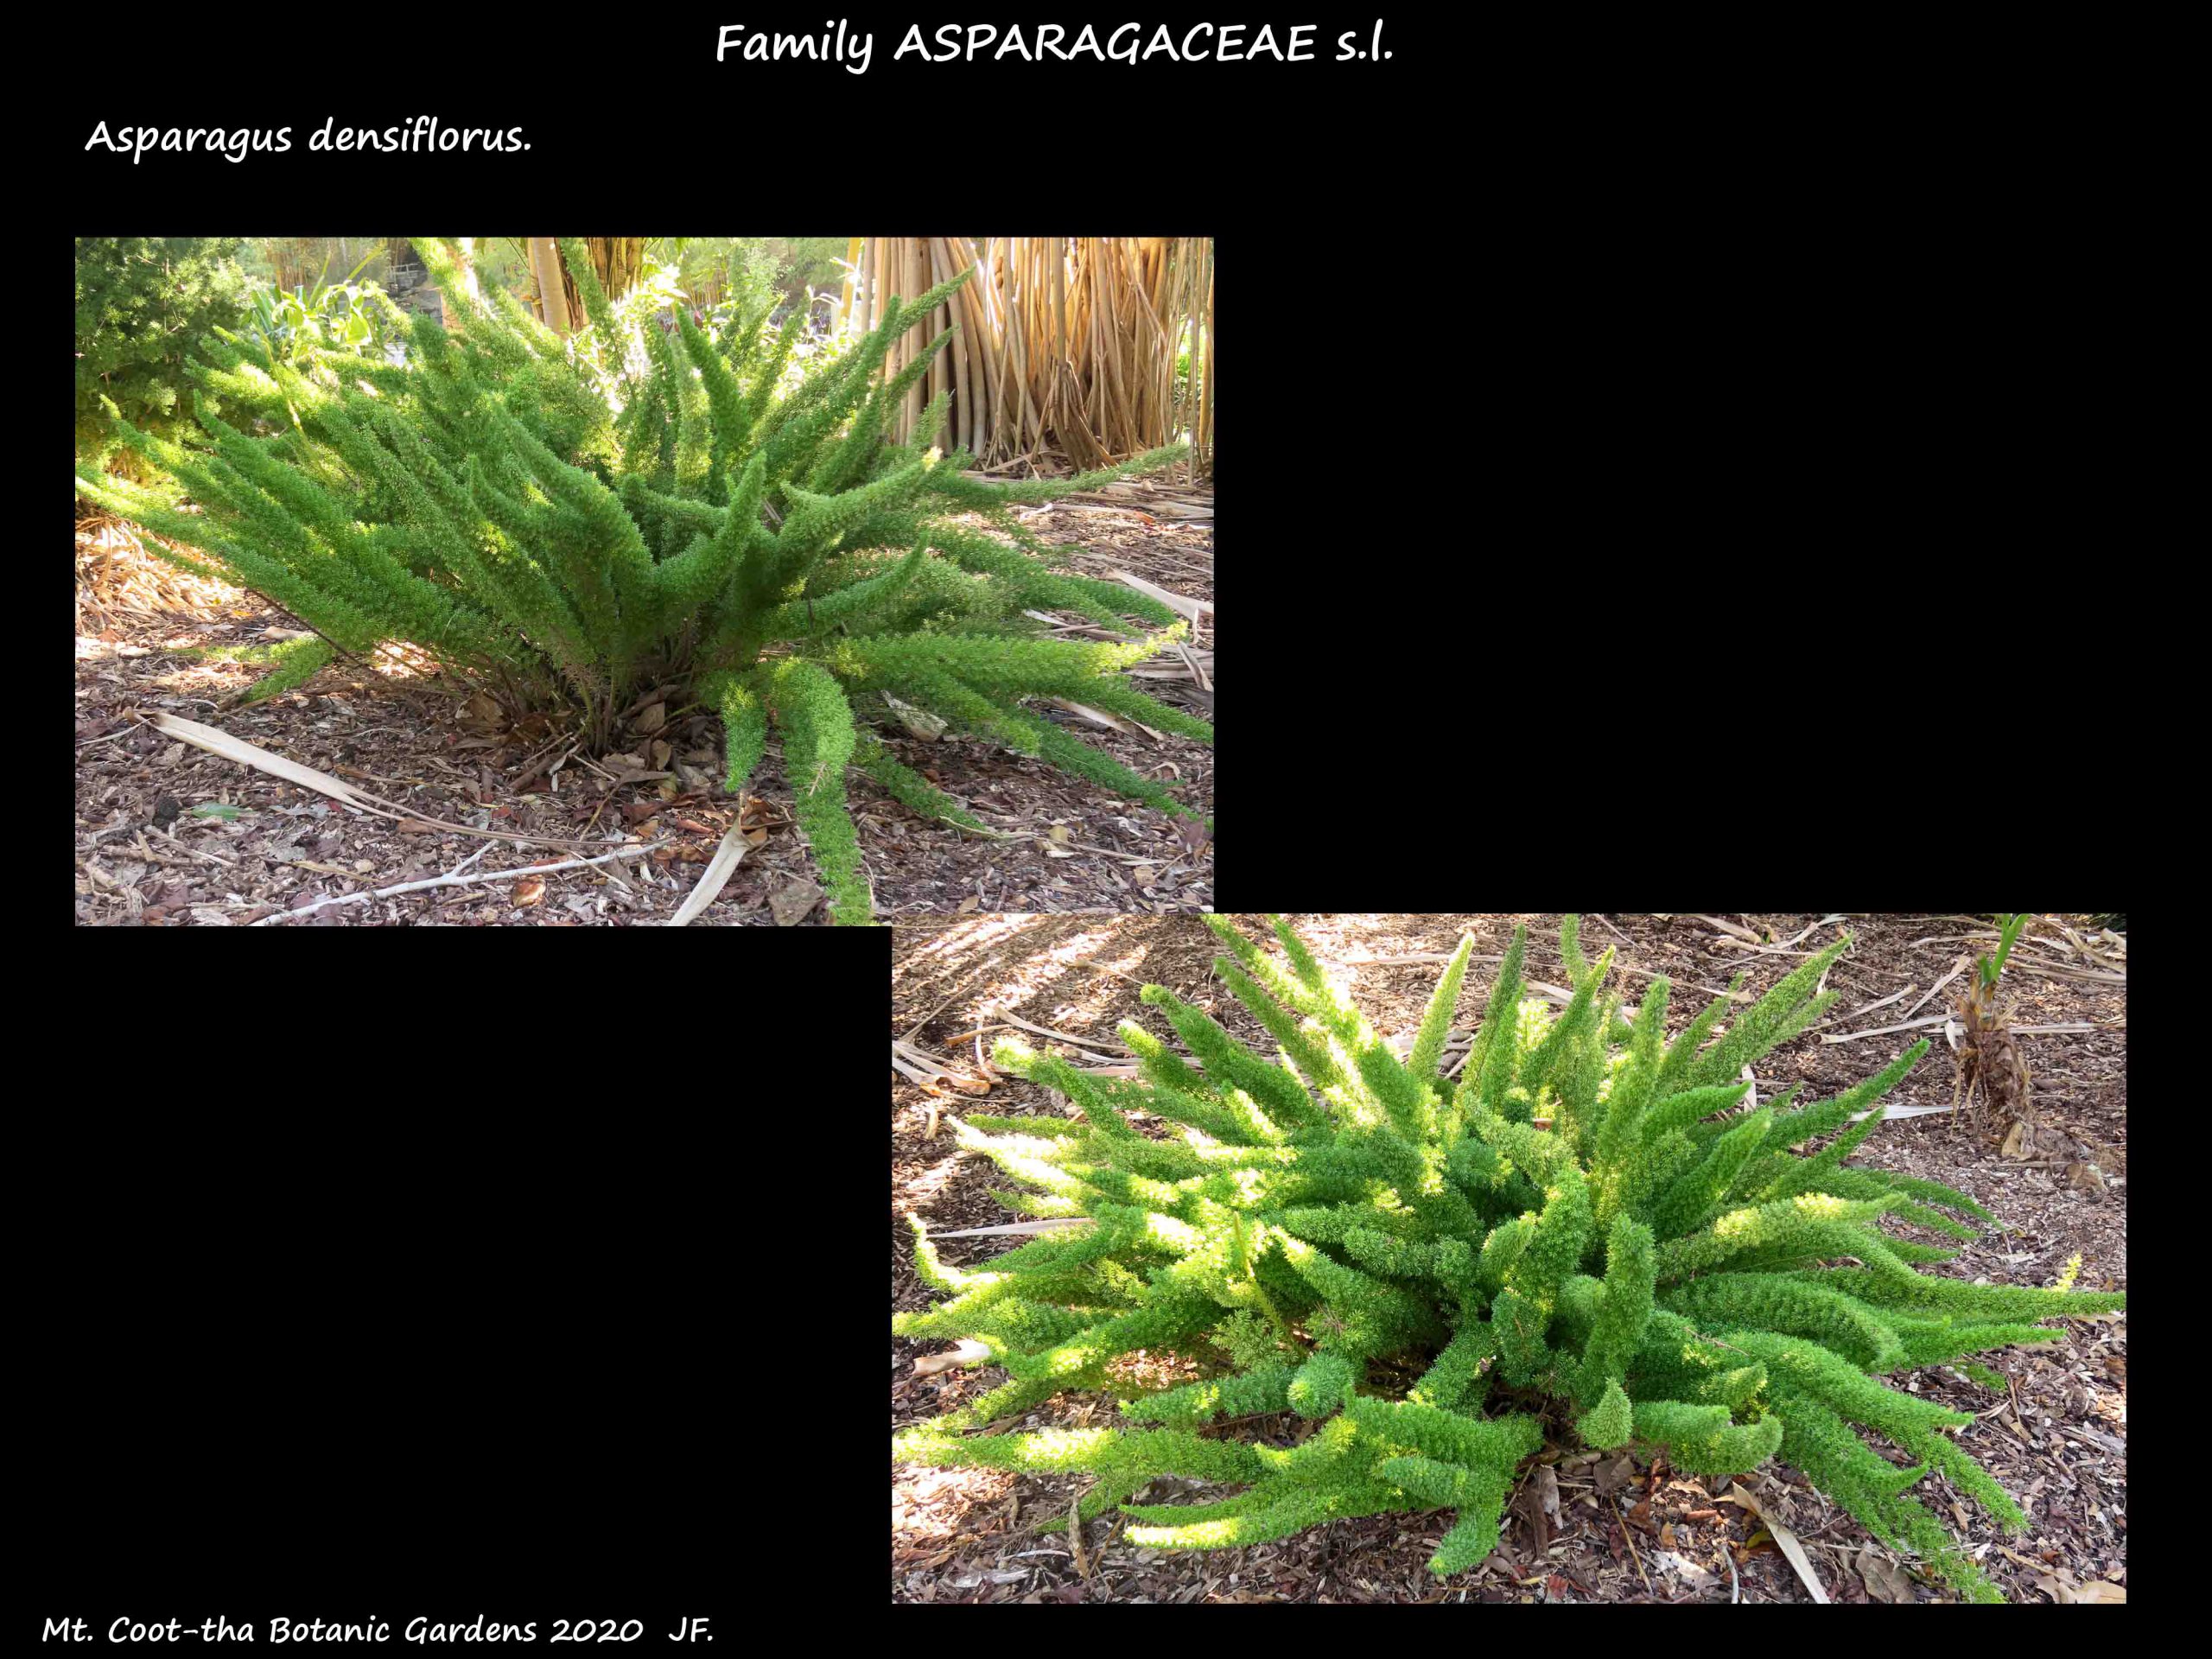 4 Another Asparagus densiflorus